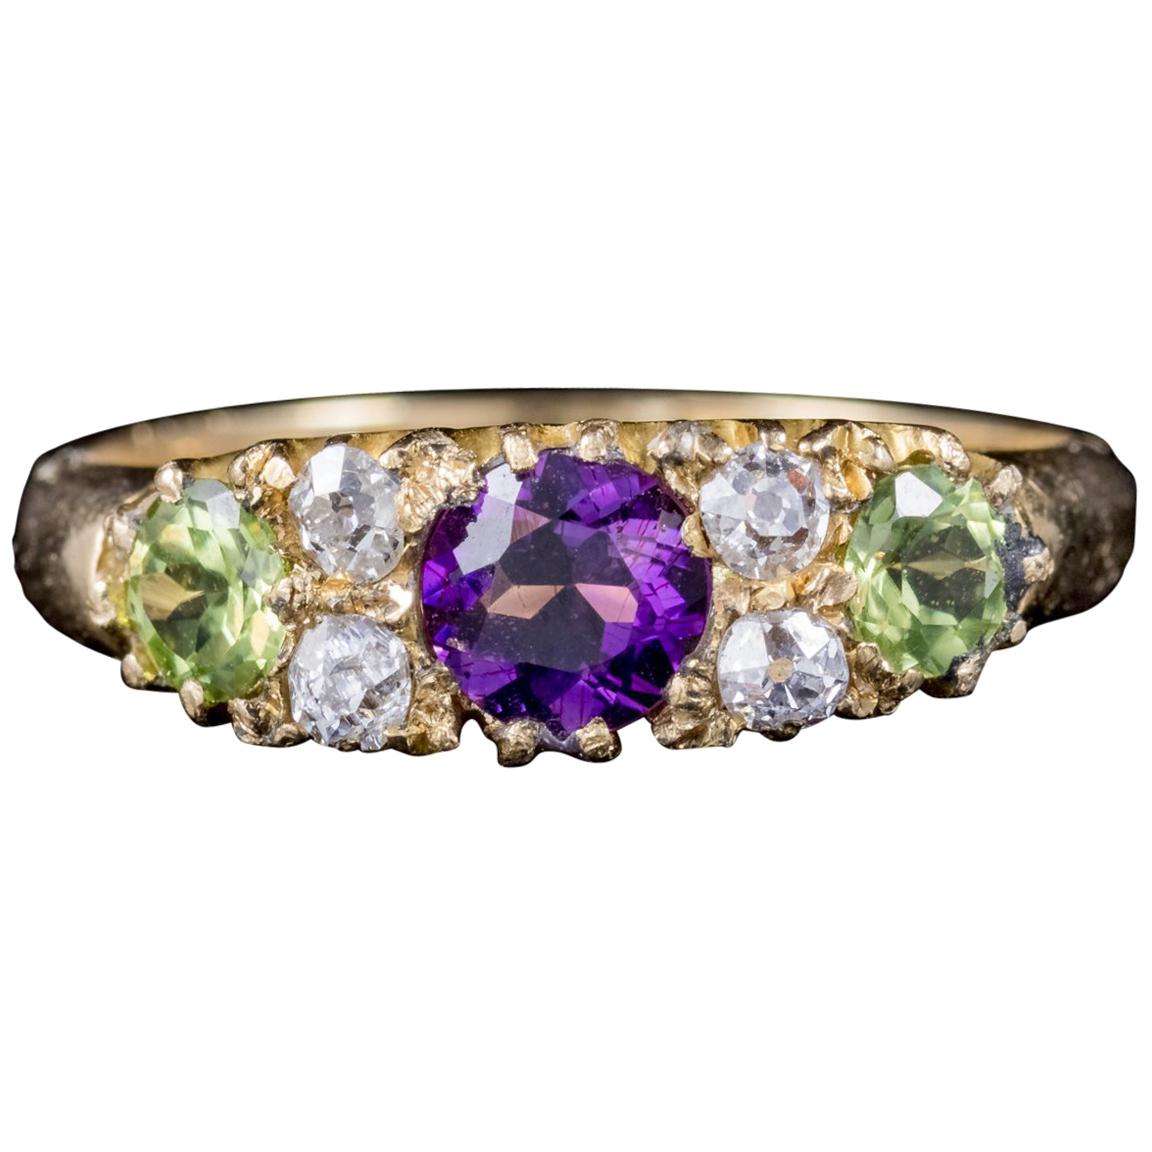 Antique 18 Carat Gold Edwardian Suffragette Ring Amethyst Peridot Diamond, 1912